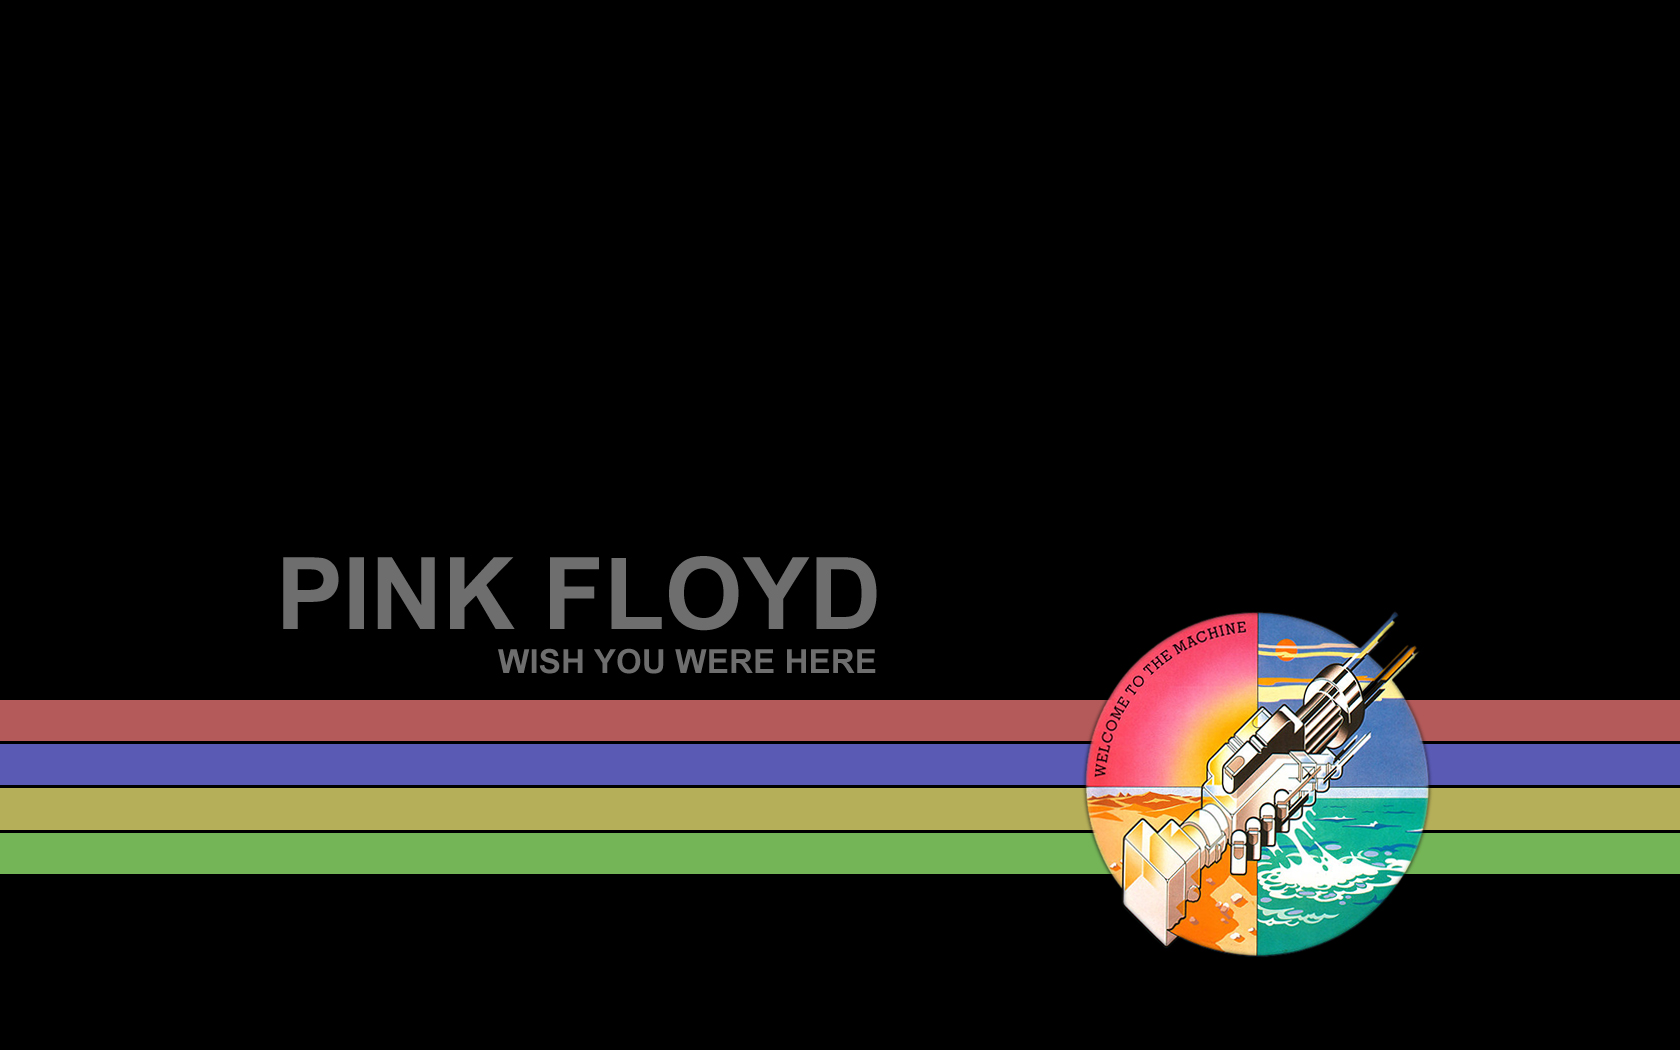 Wish You Were Here pink floyd artwork and lyrics